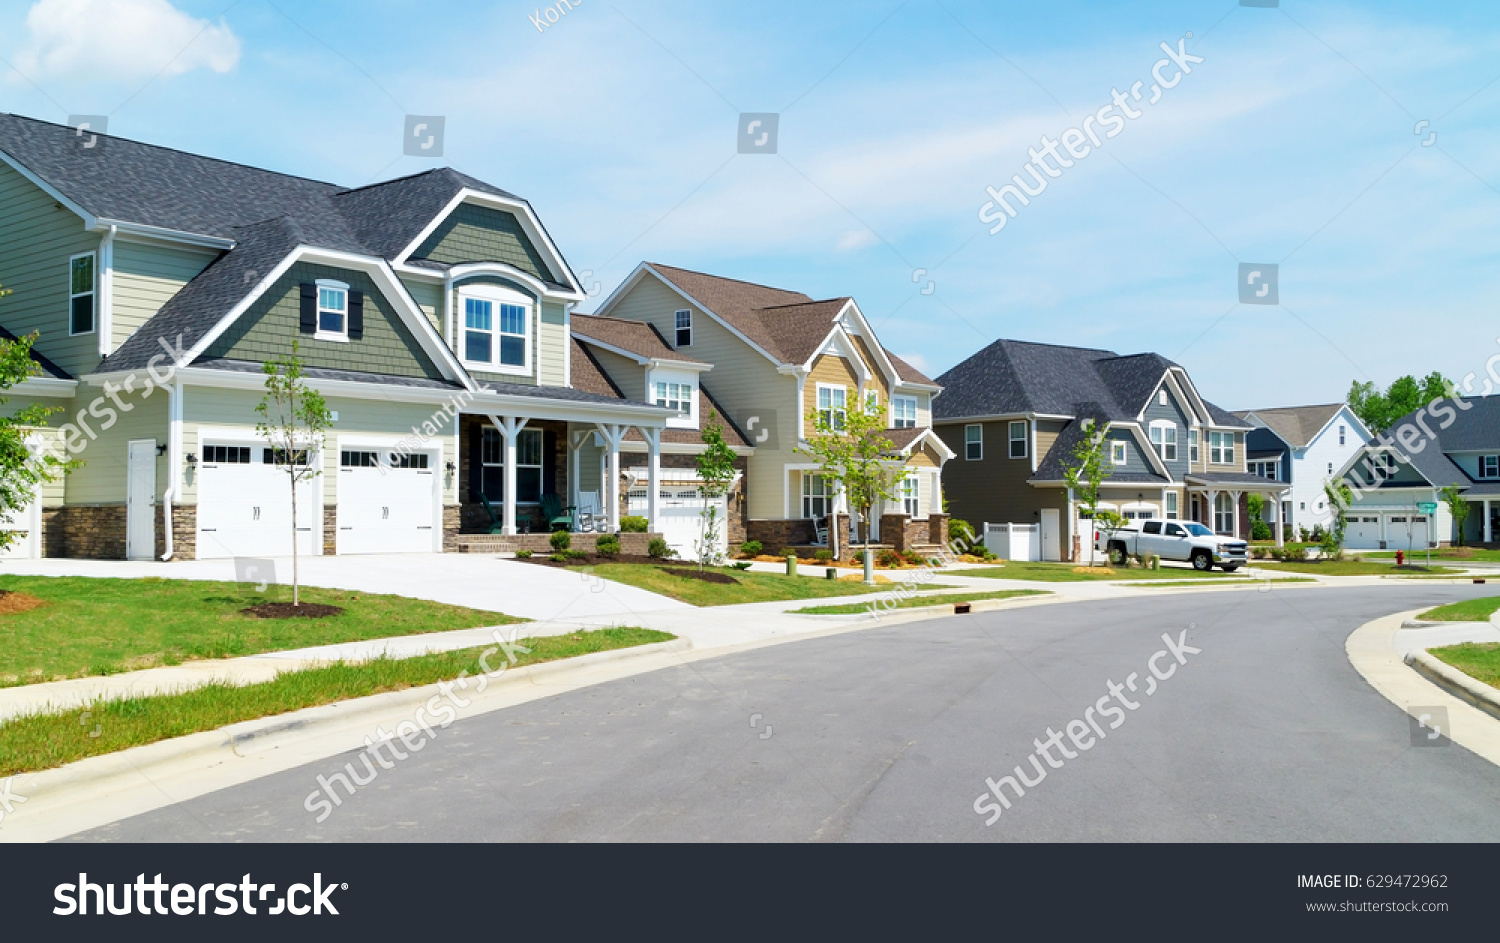 Street of suburban homes #629472962